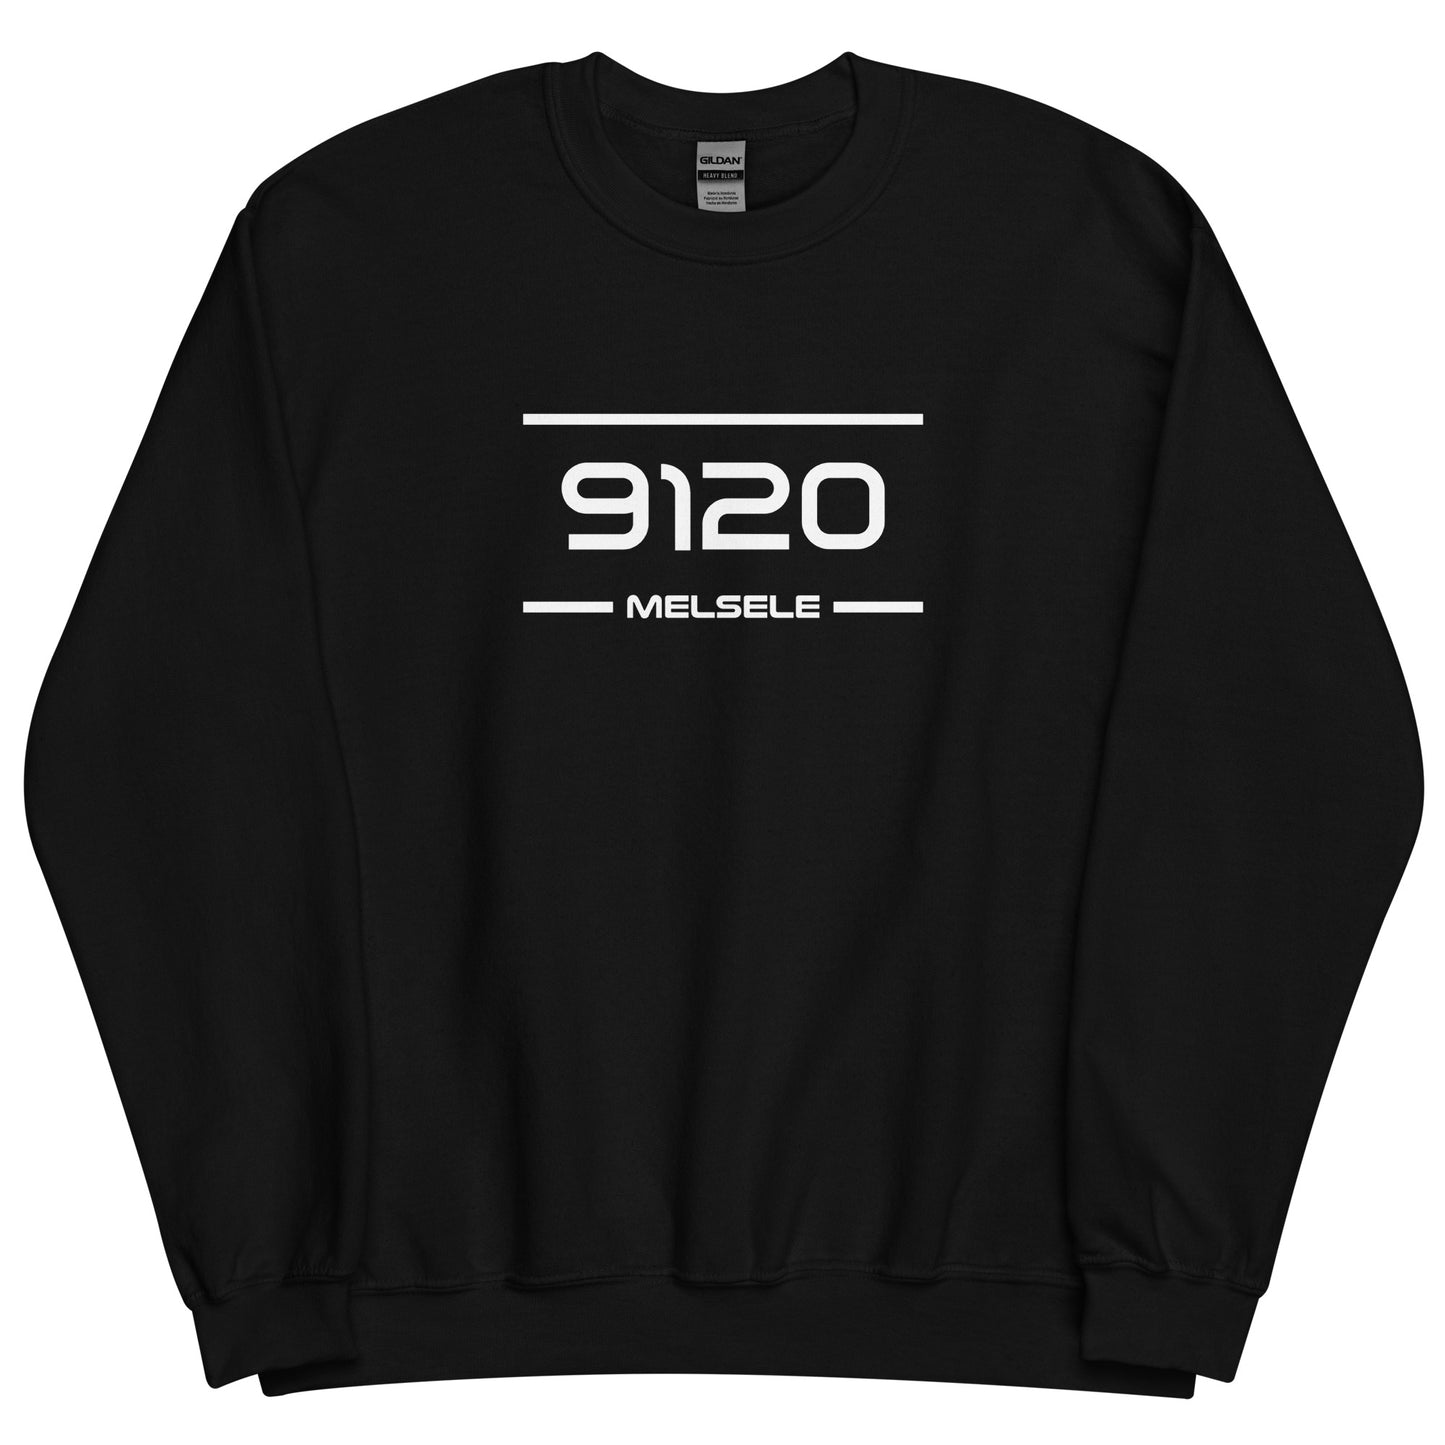 Sweater - 9120 - Melsele (M/V)